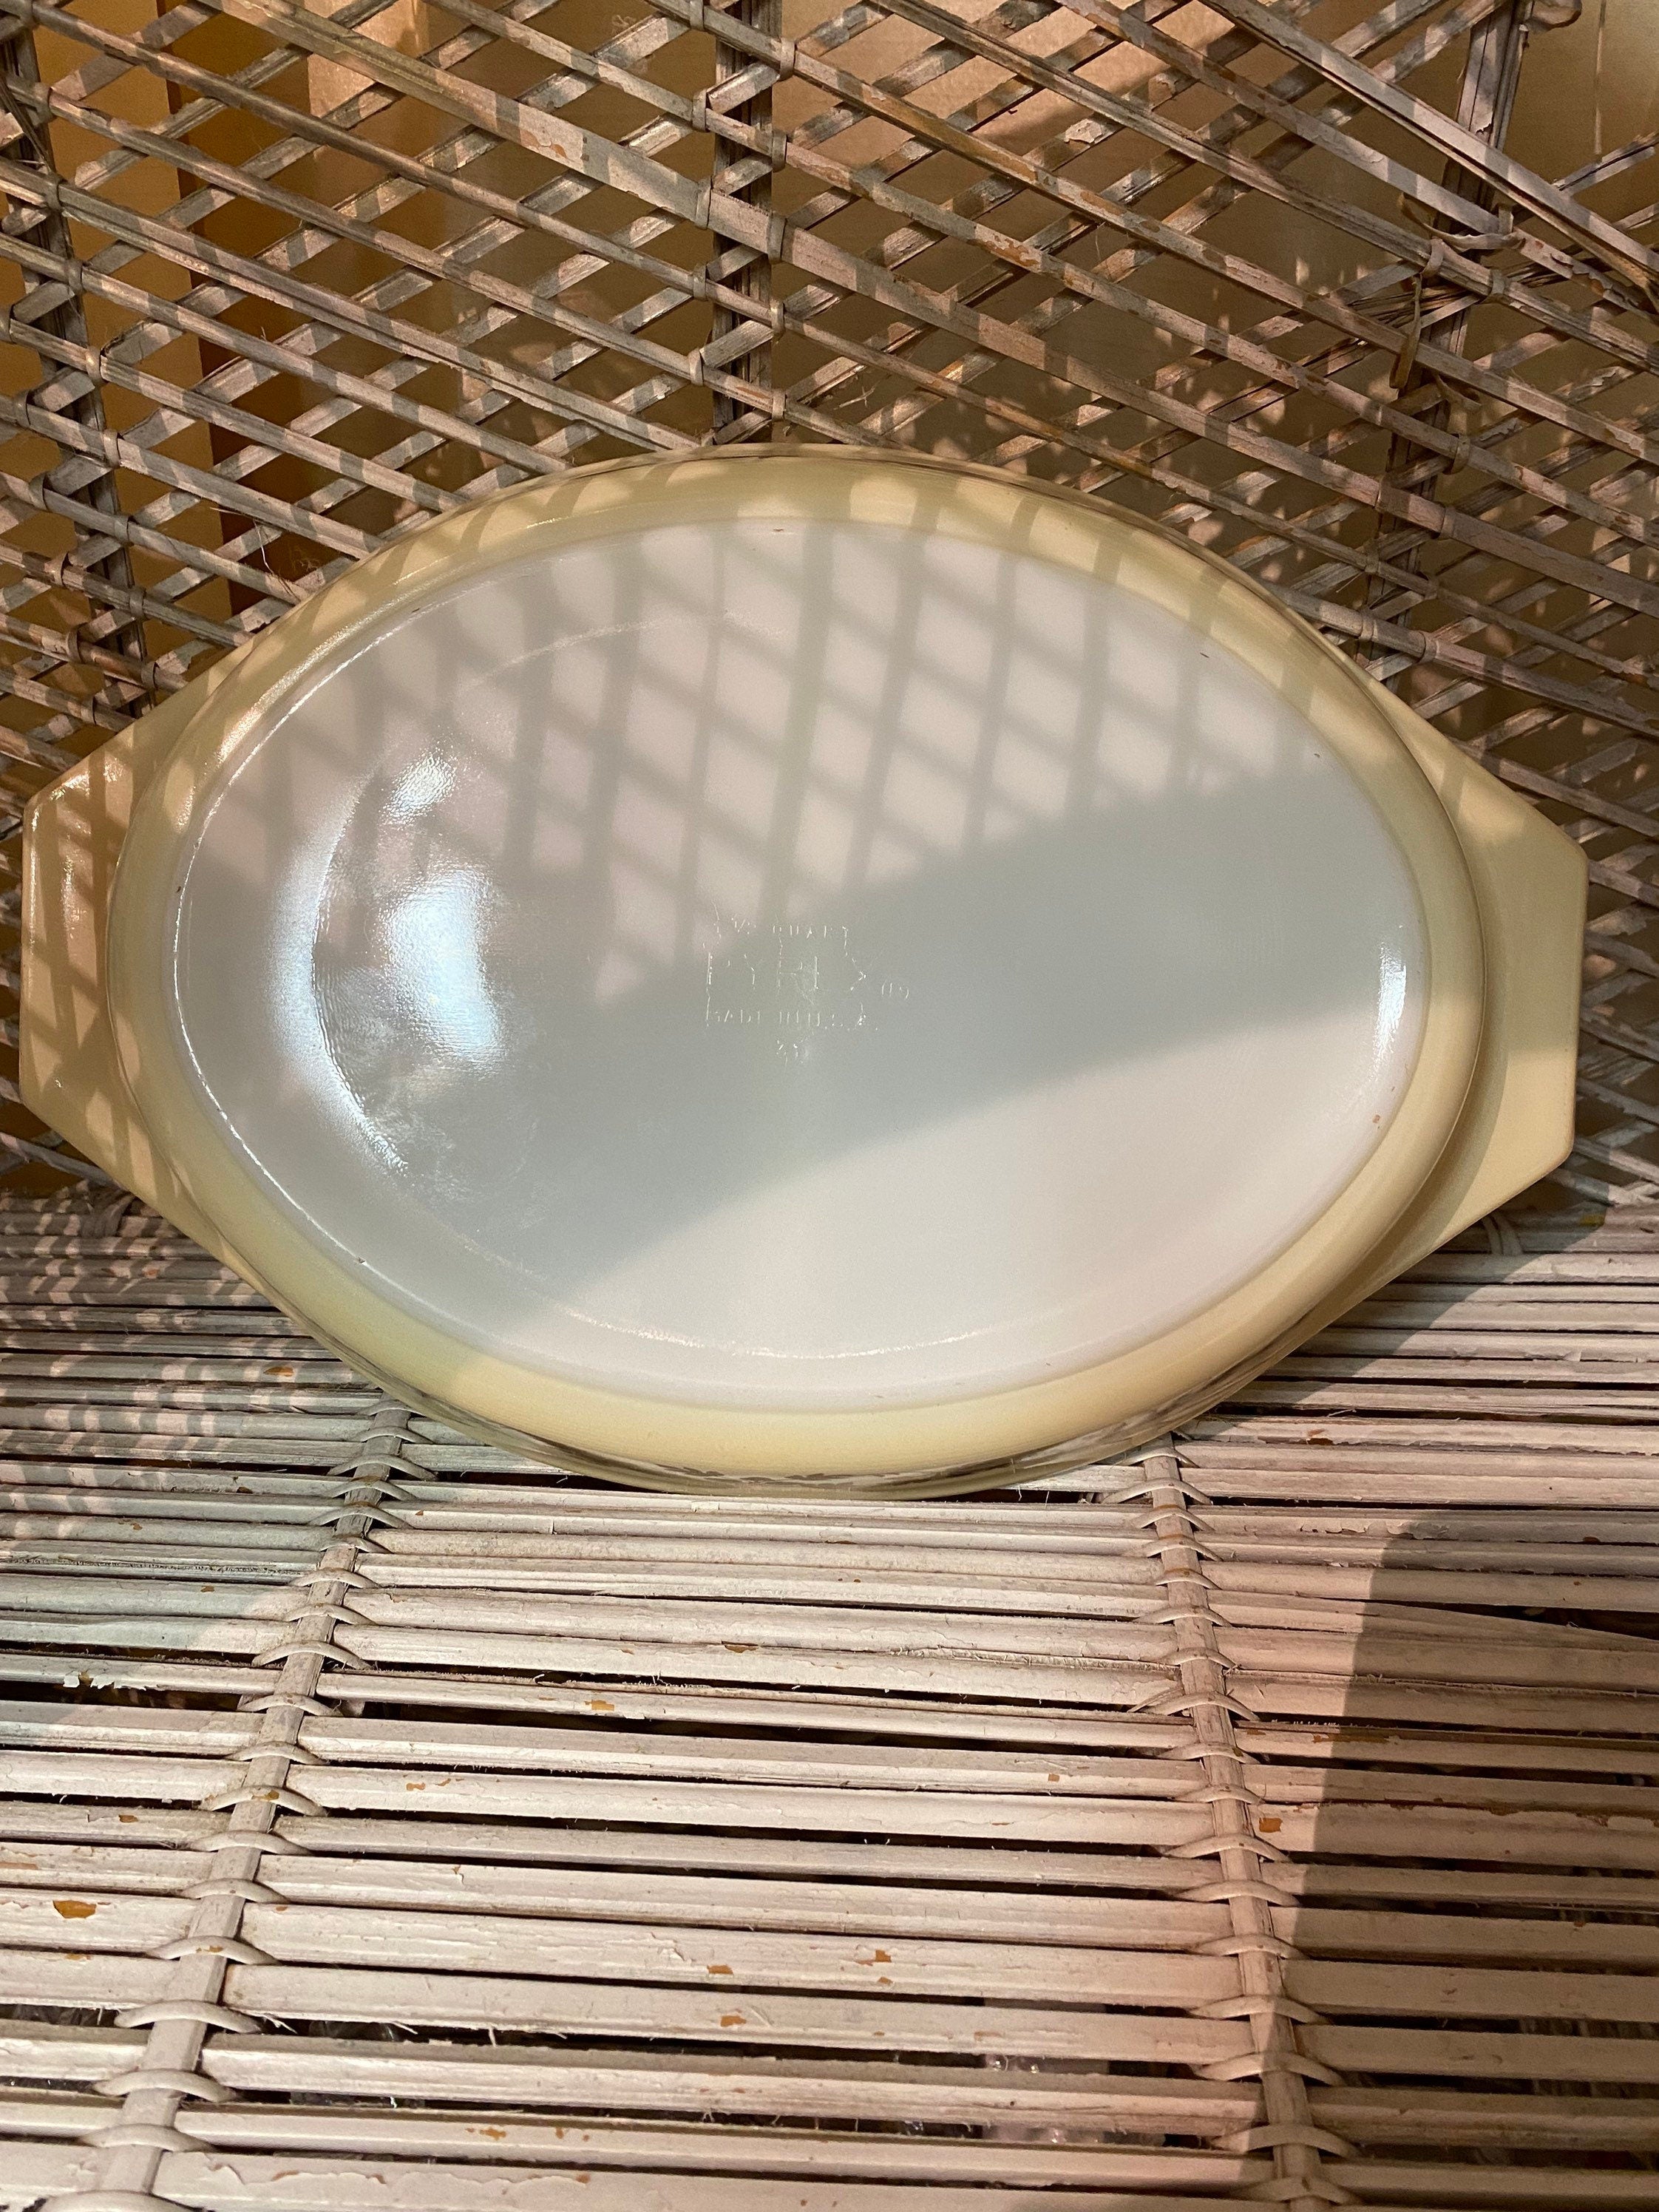 Vintage Pyrex GOLDEN ACORN Divided Casserole Dish Gold Leaf 1-1/2 QT